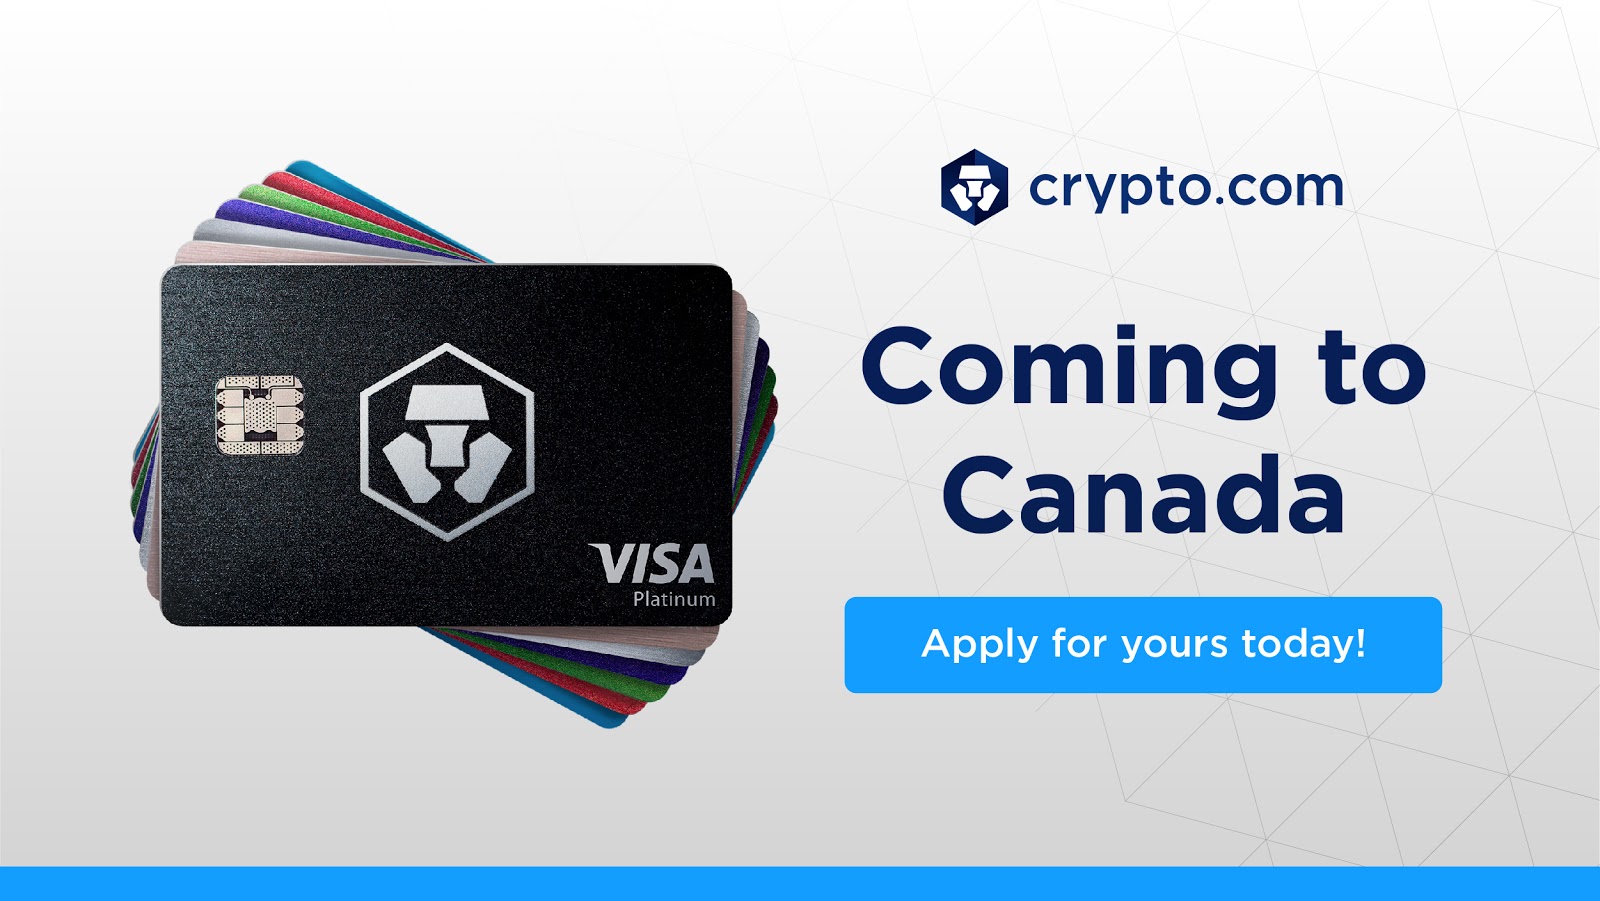 Crypto.com Visa Card is shipping to Canada